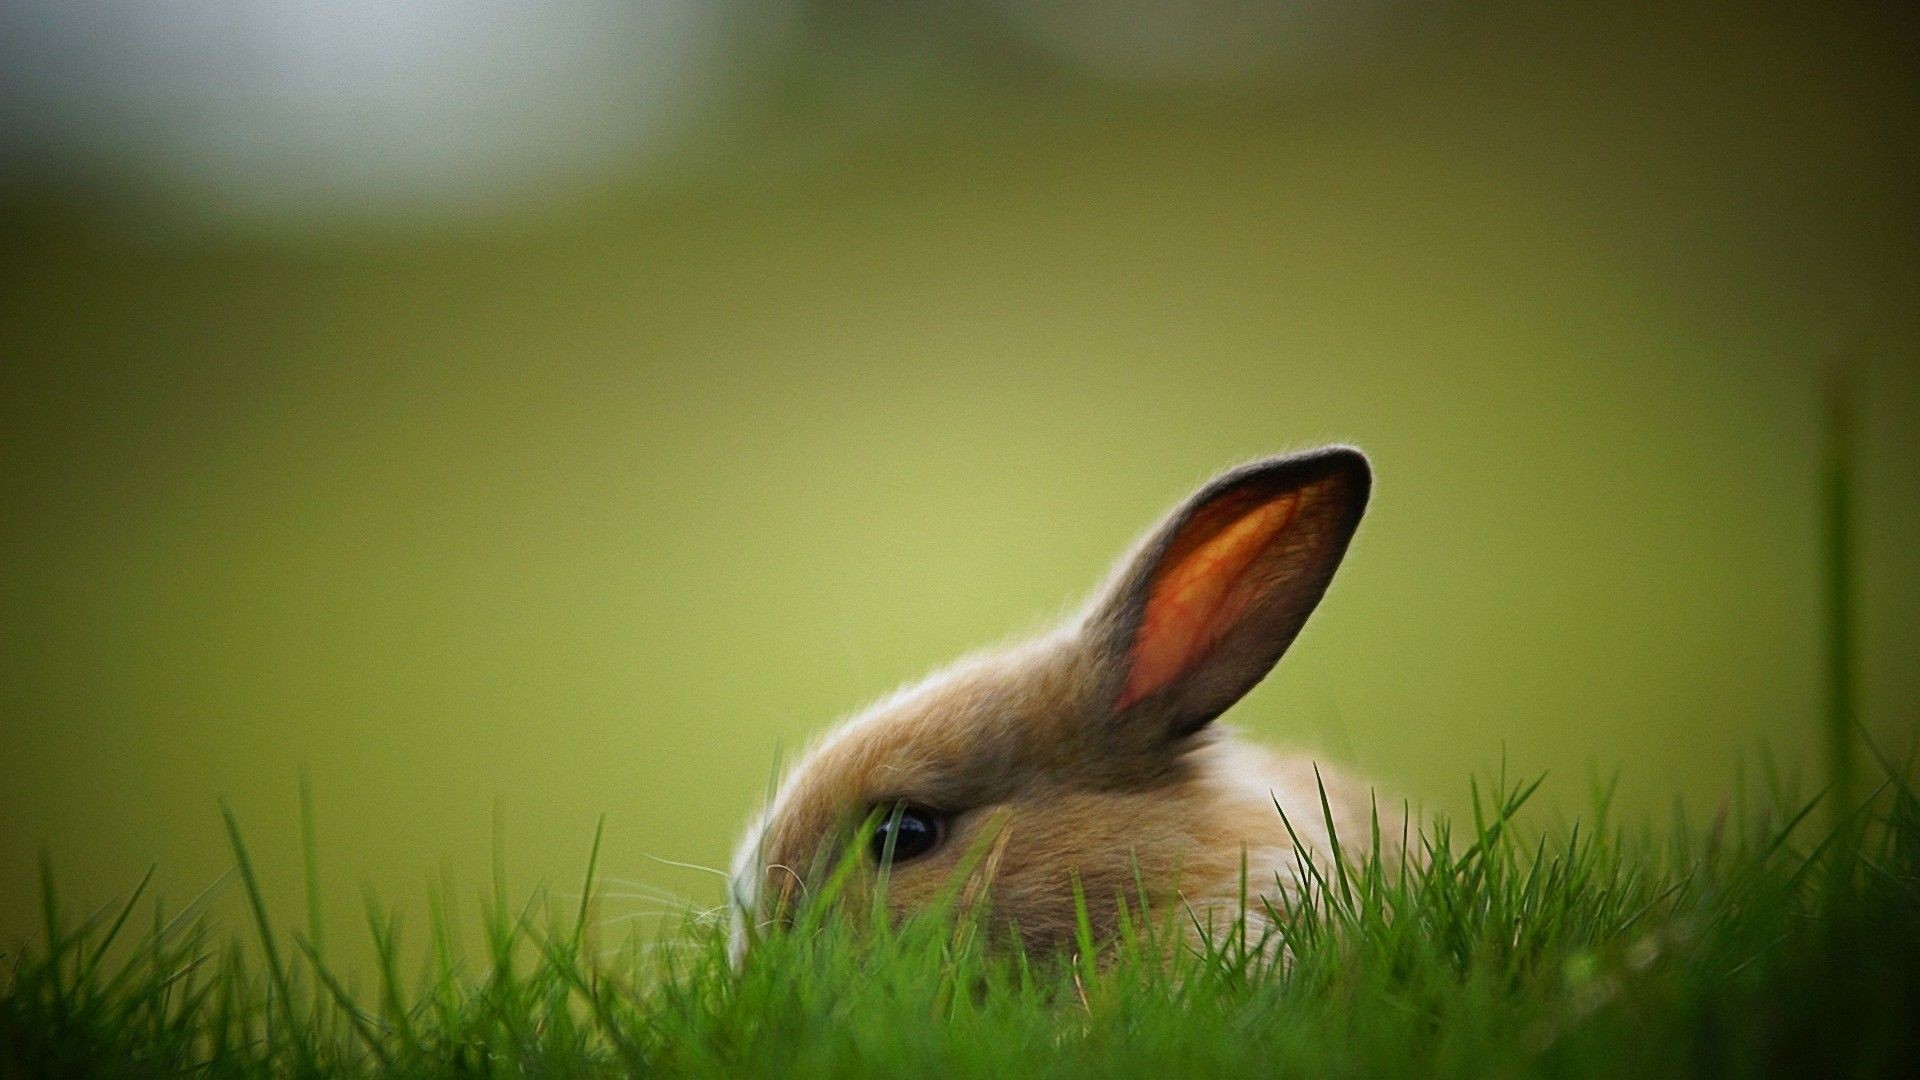 Bunny Background